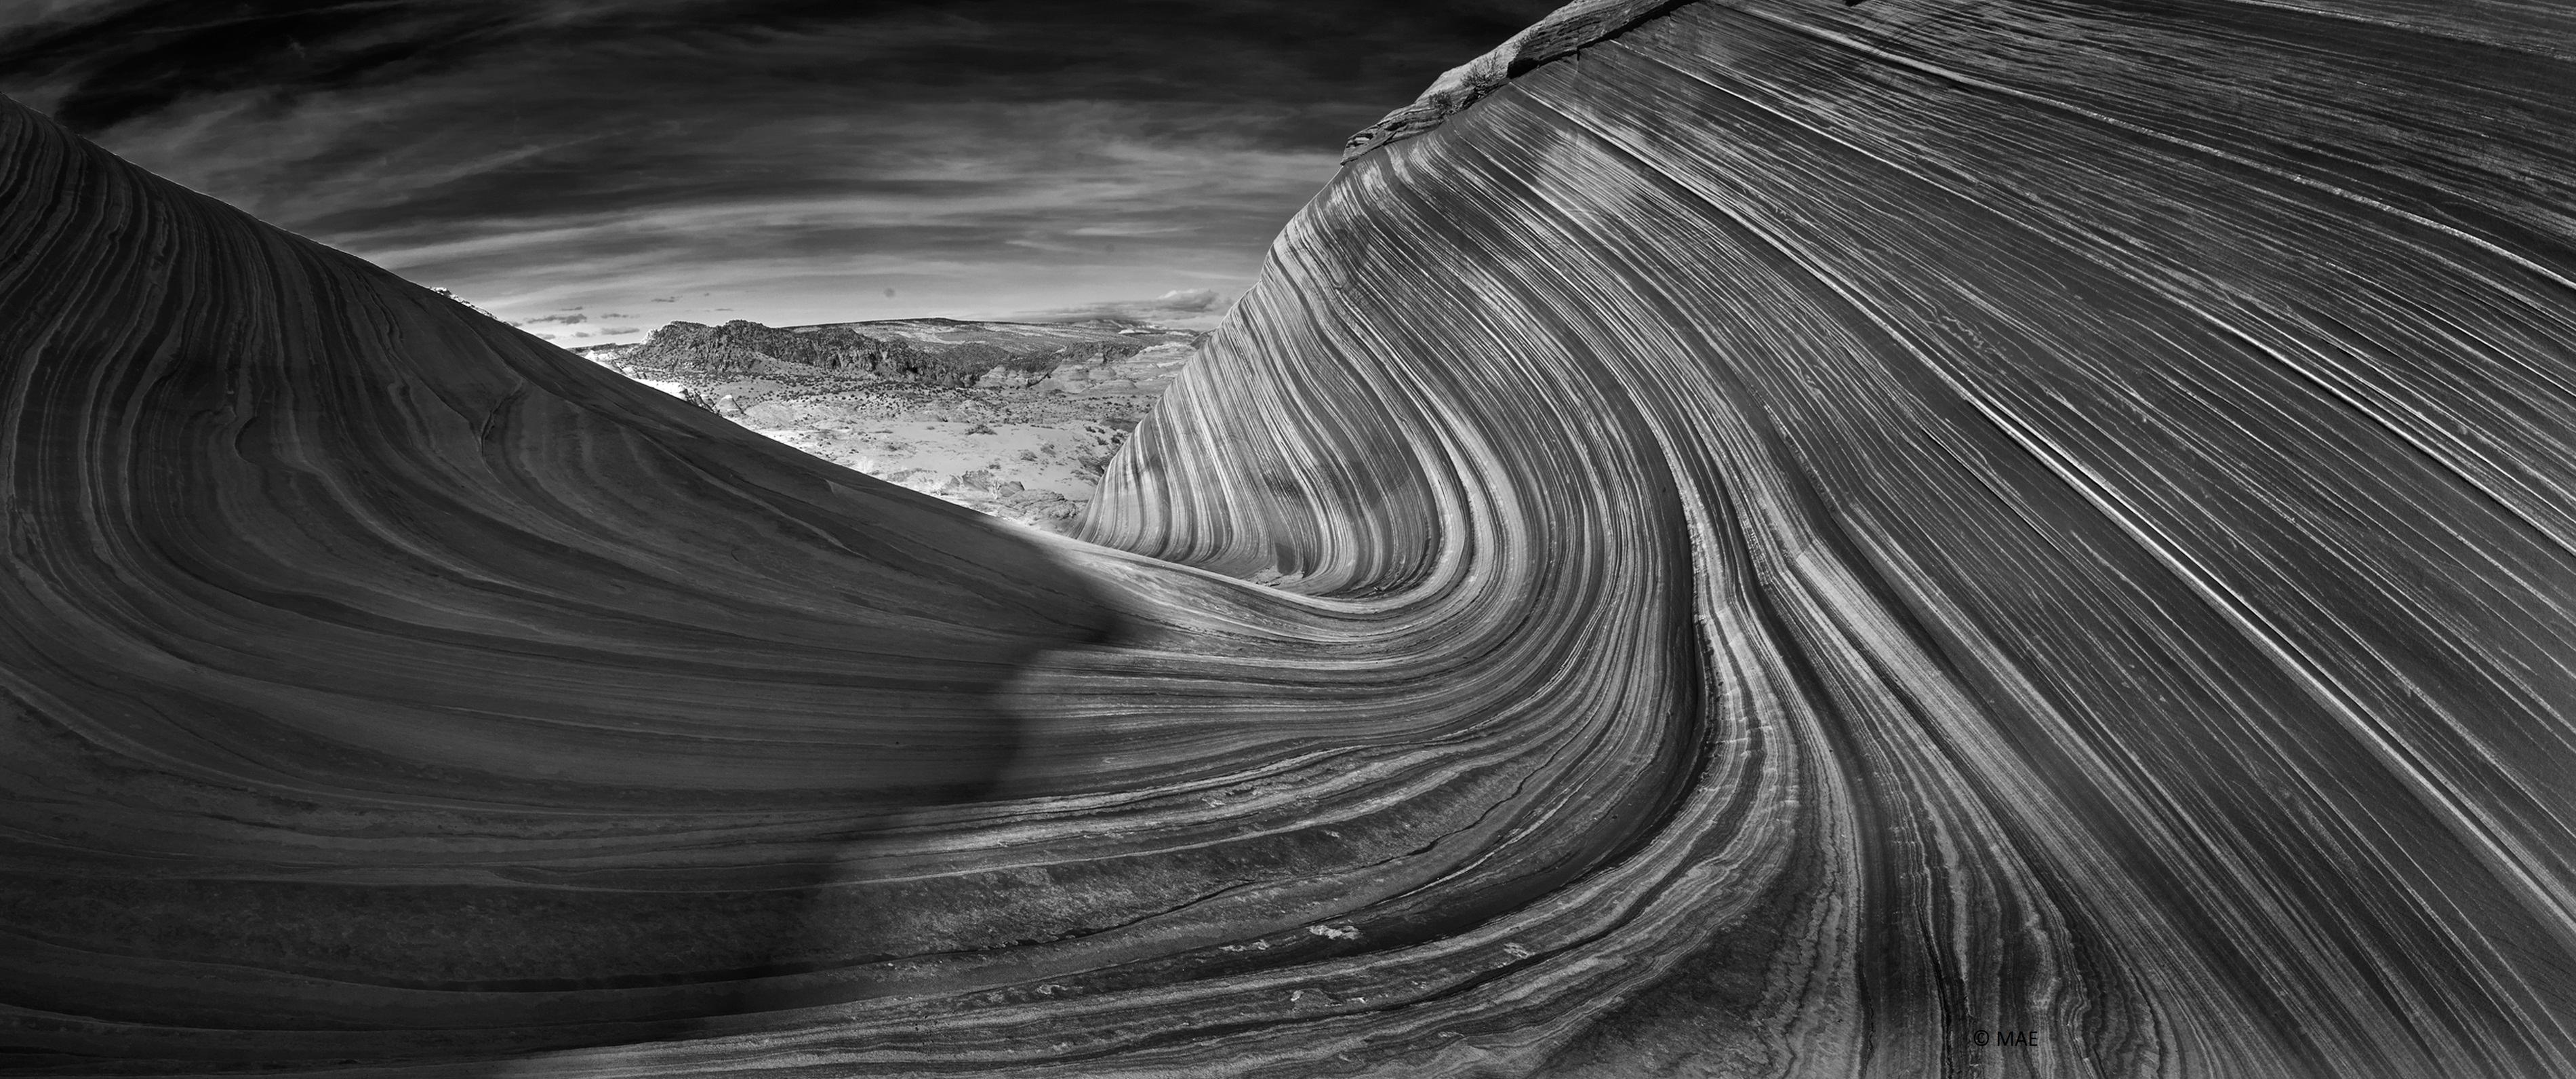 the wave canyon arizona